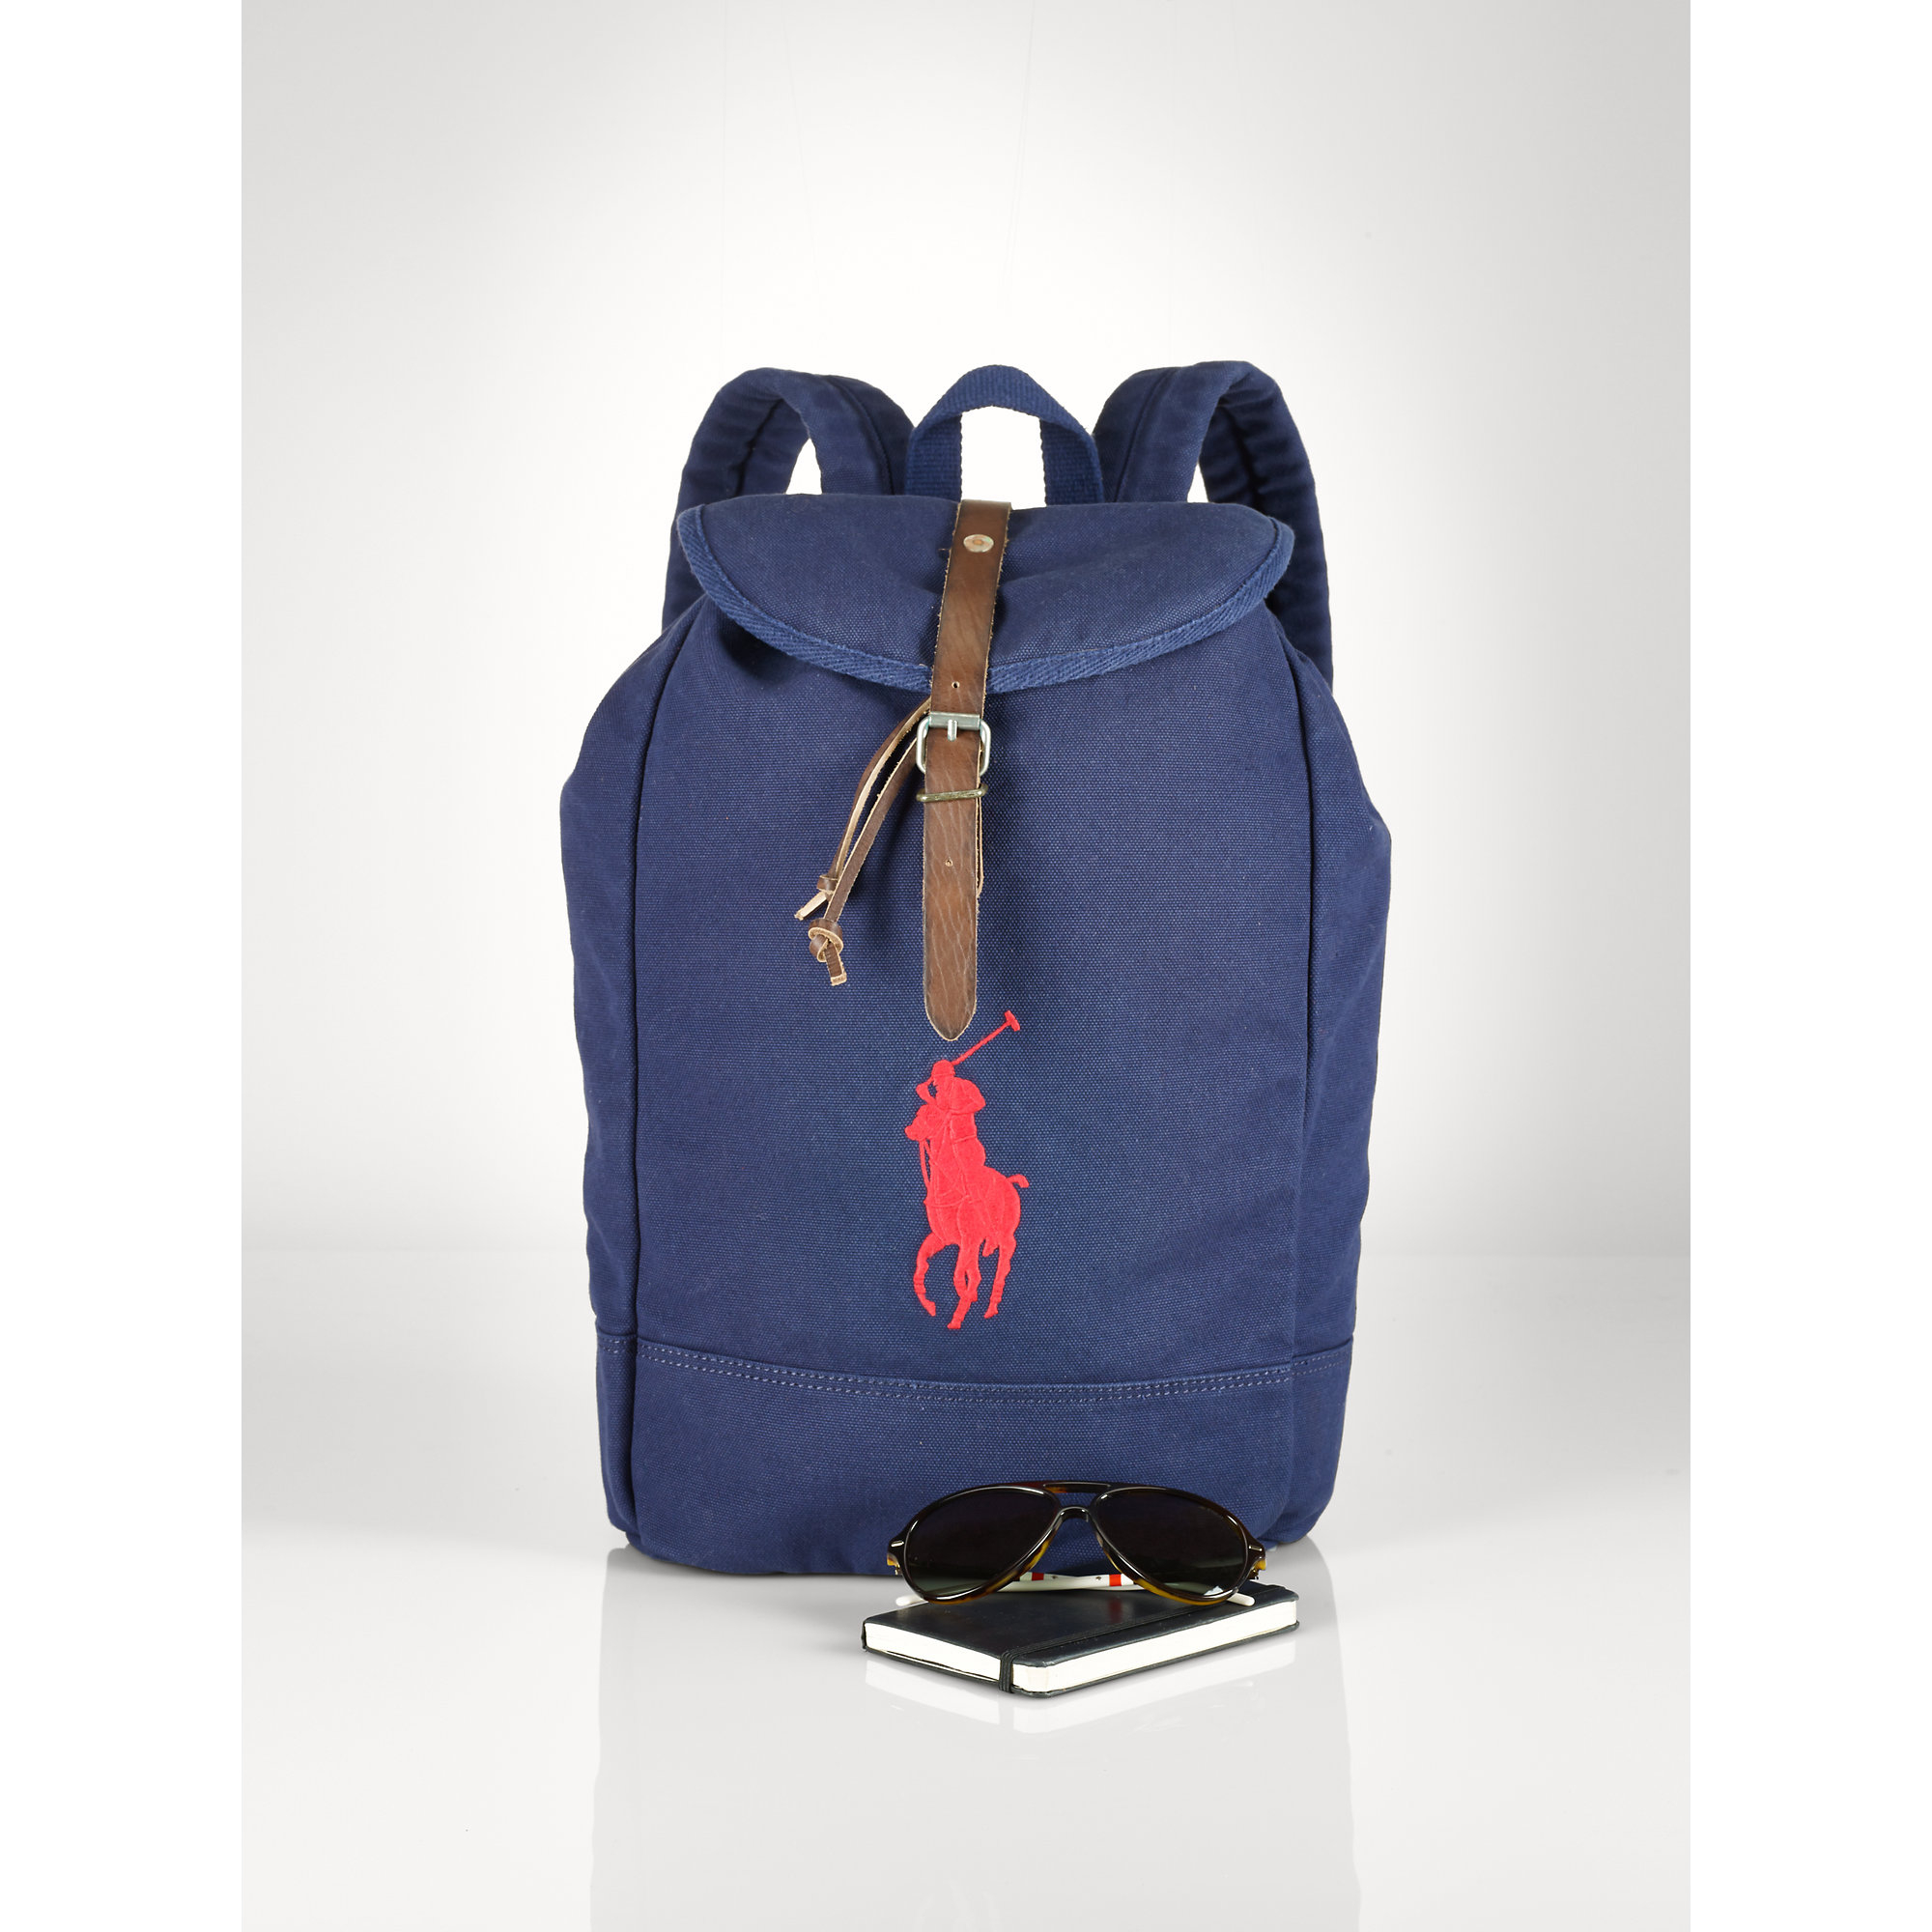 Lyst - Polo Ralph Lauren Big Pony Backpack in Blue for Men